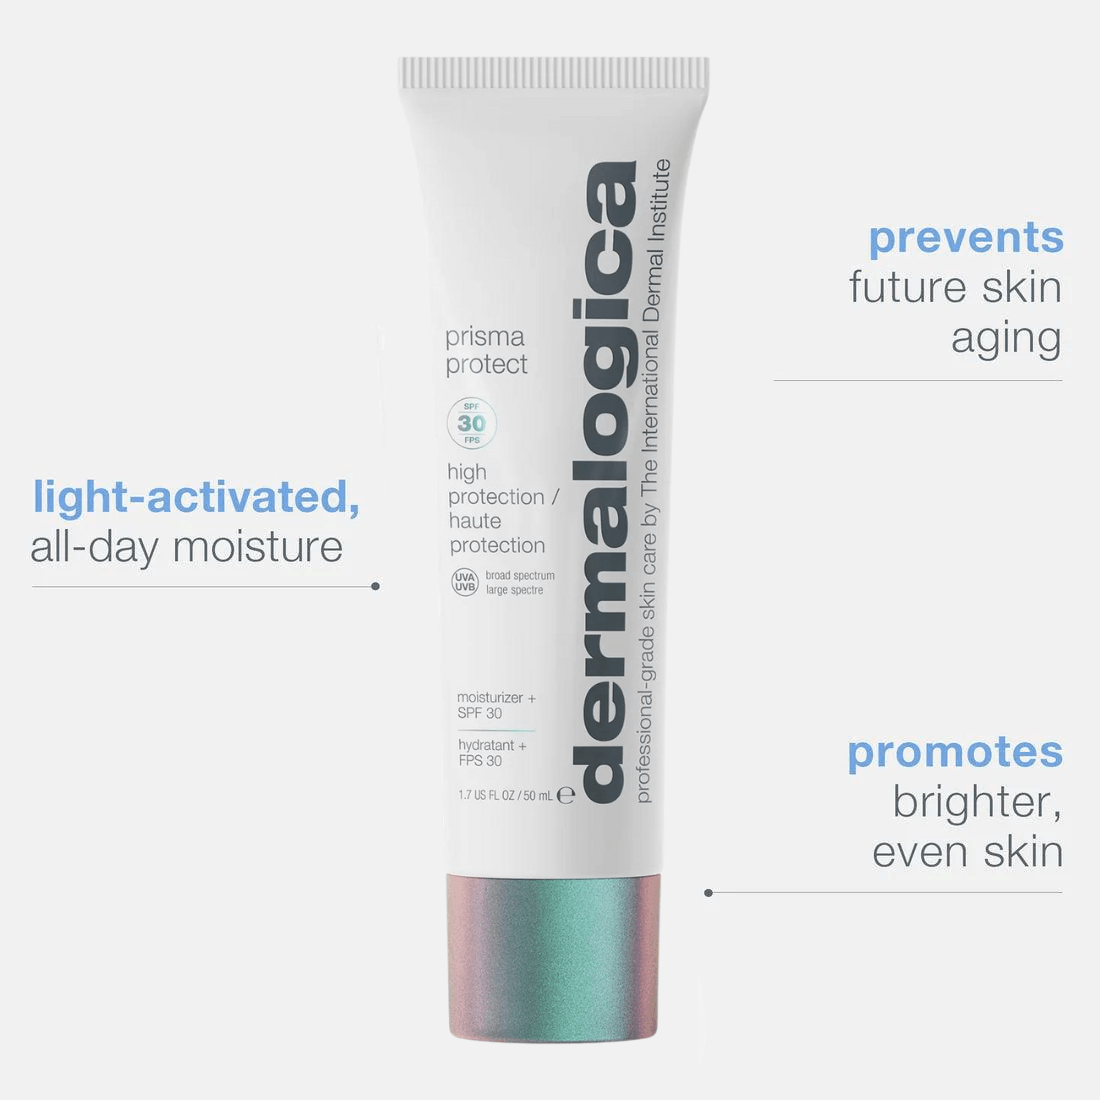 prisma protect spf30 moisturizer - Dermalogica Hong Kong